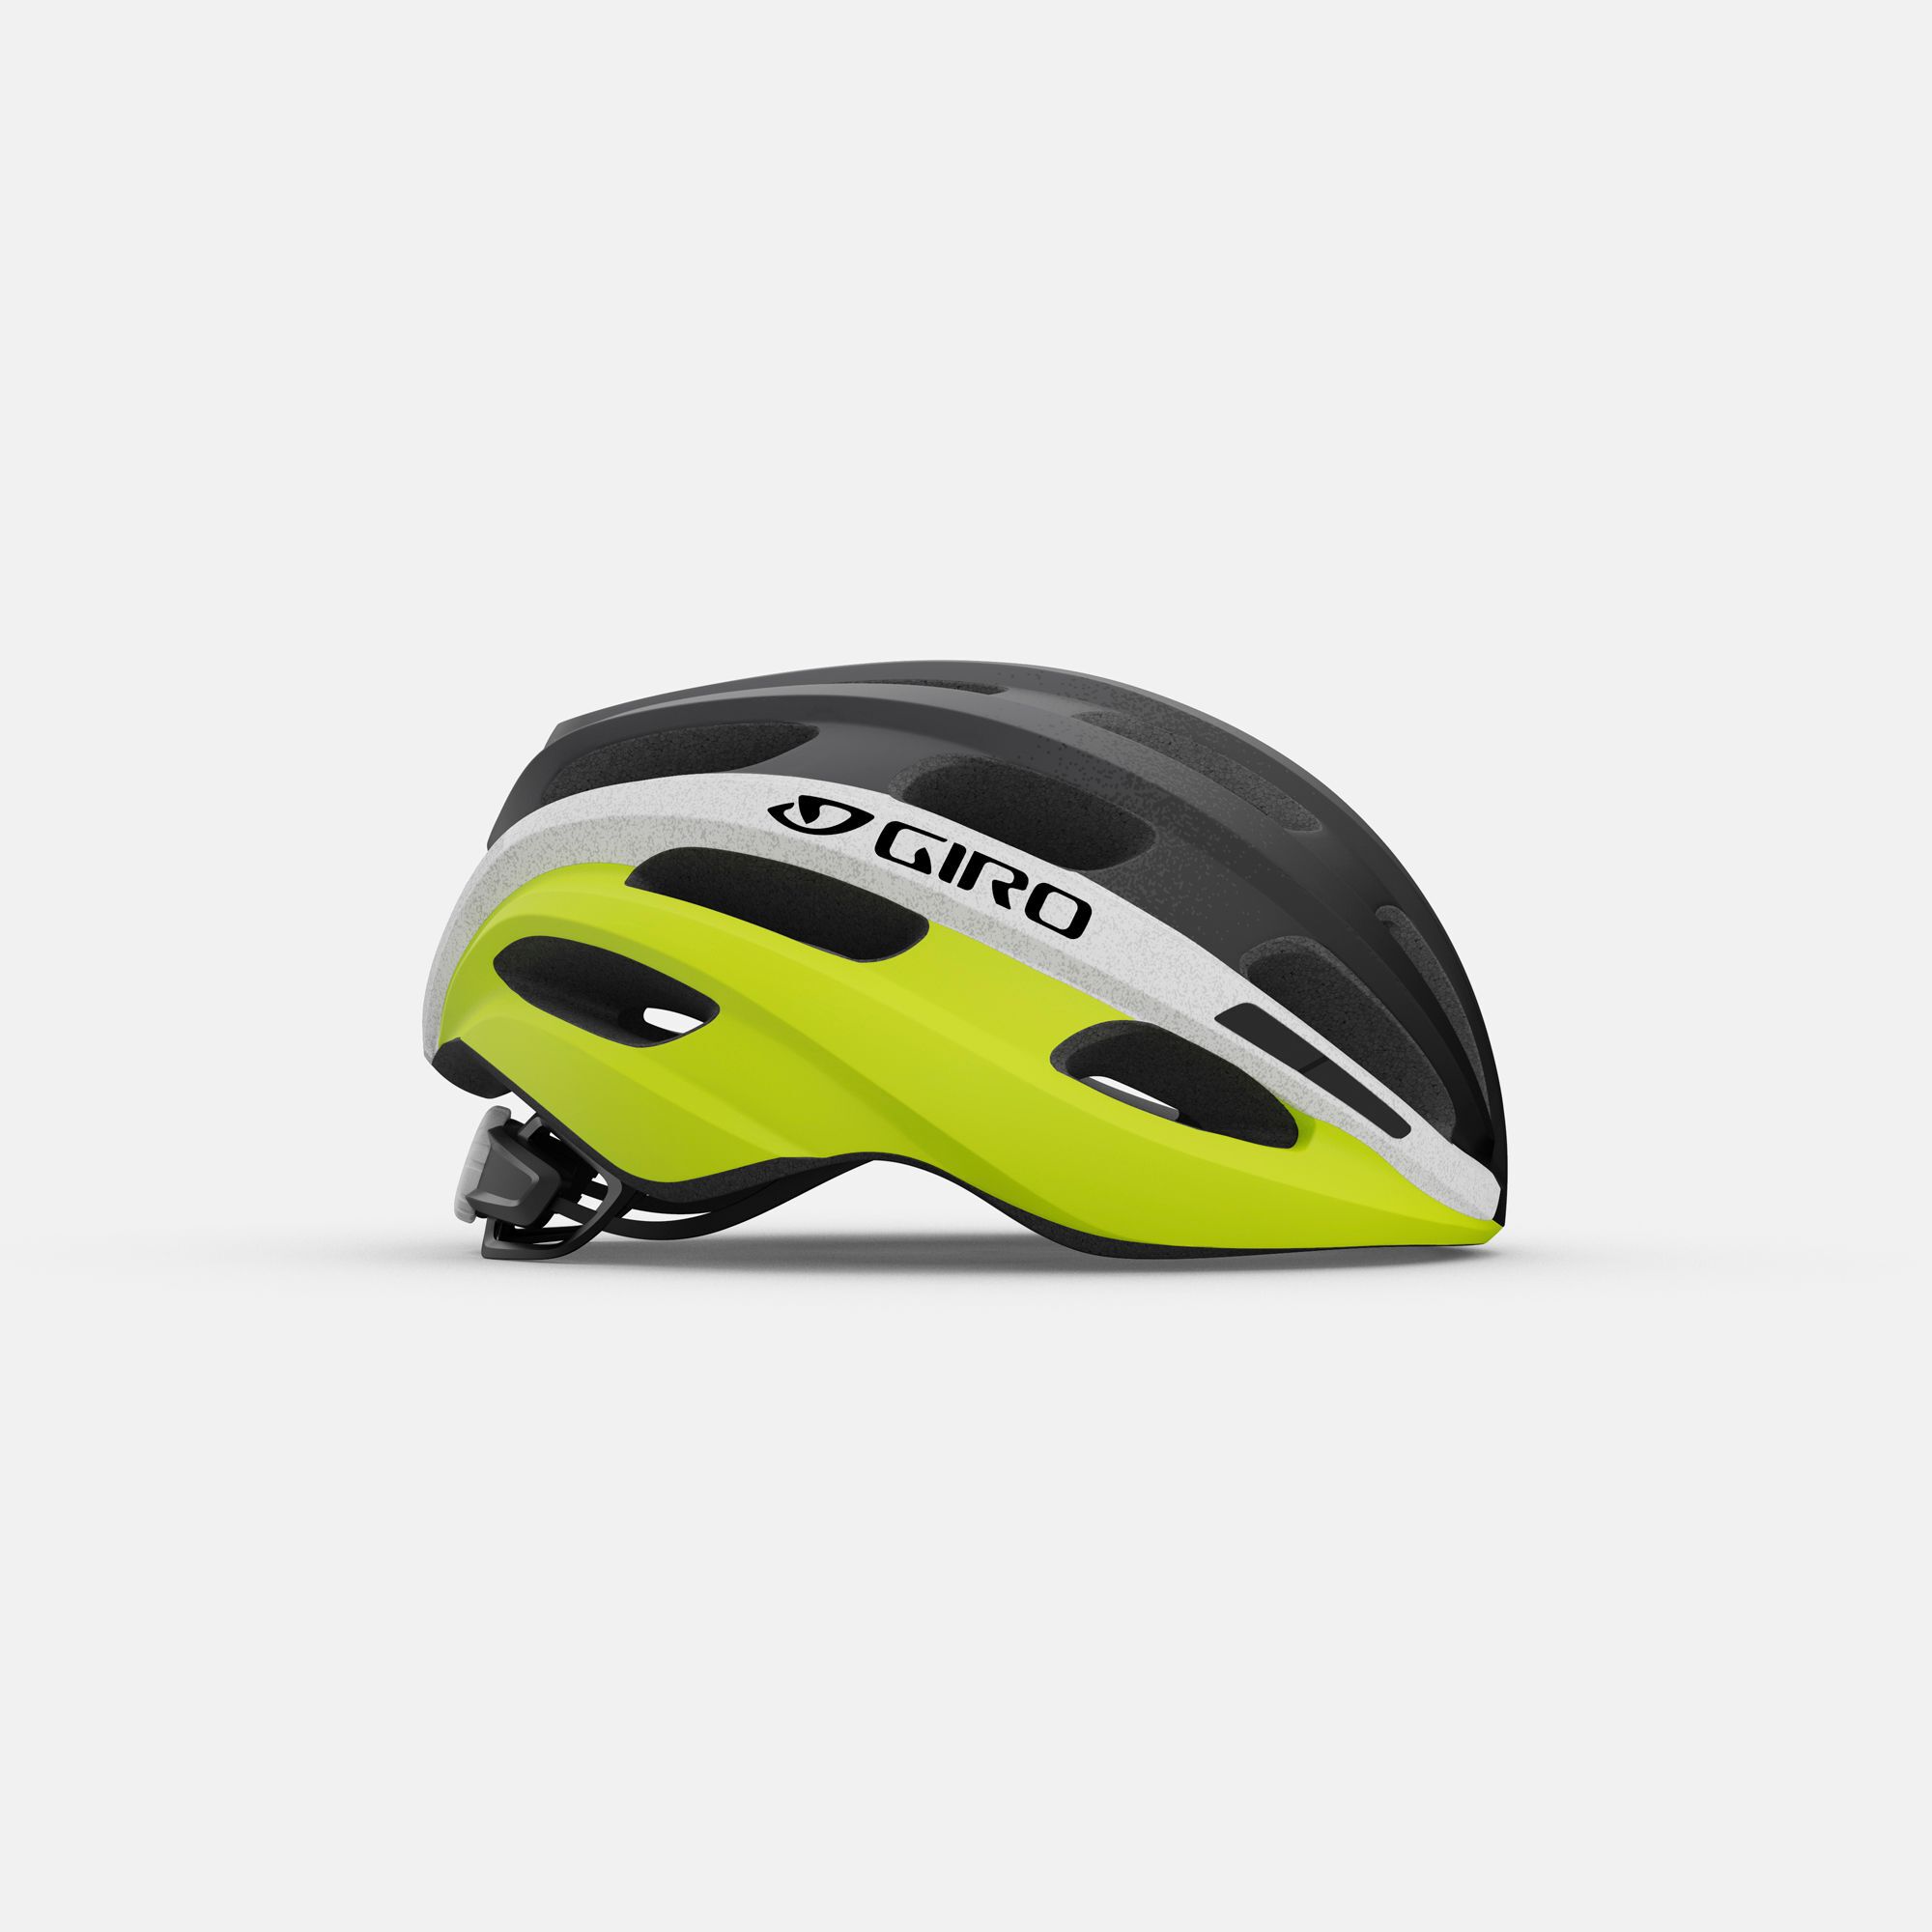 White Giro Isode Road Cycling Helmet 